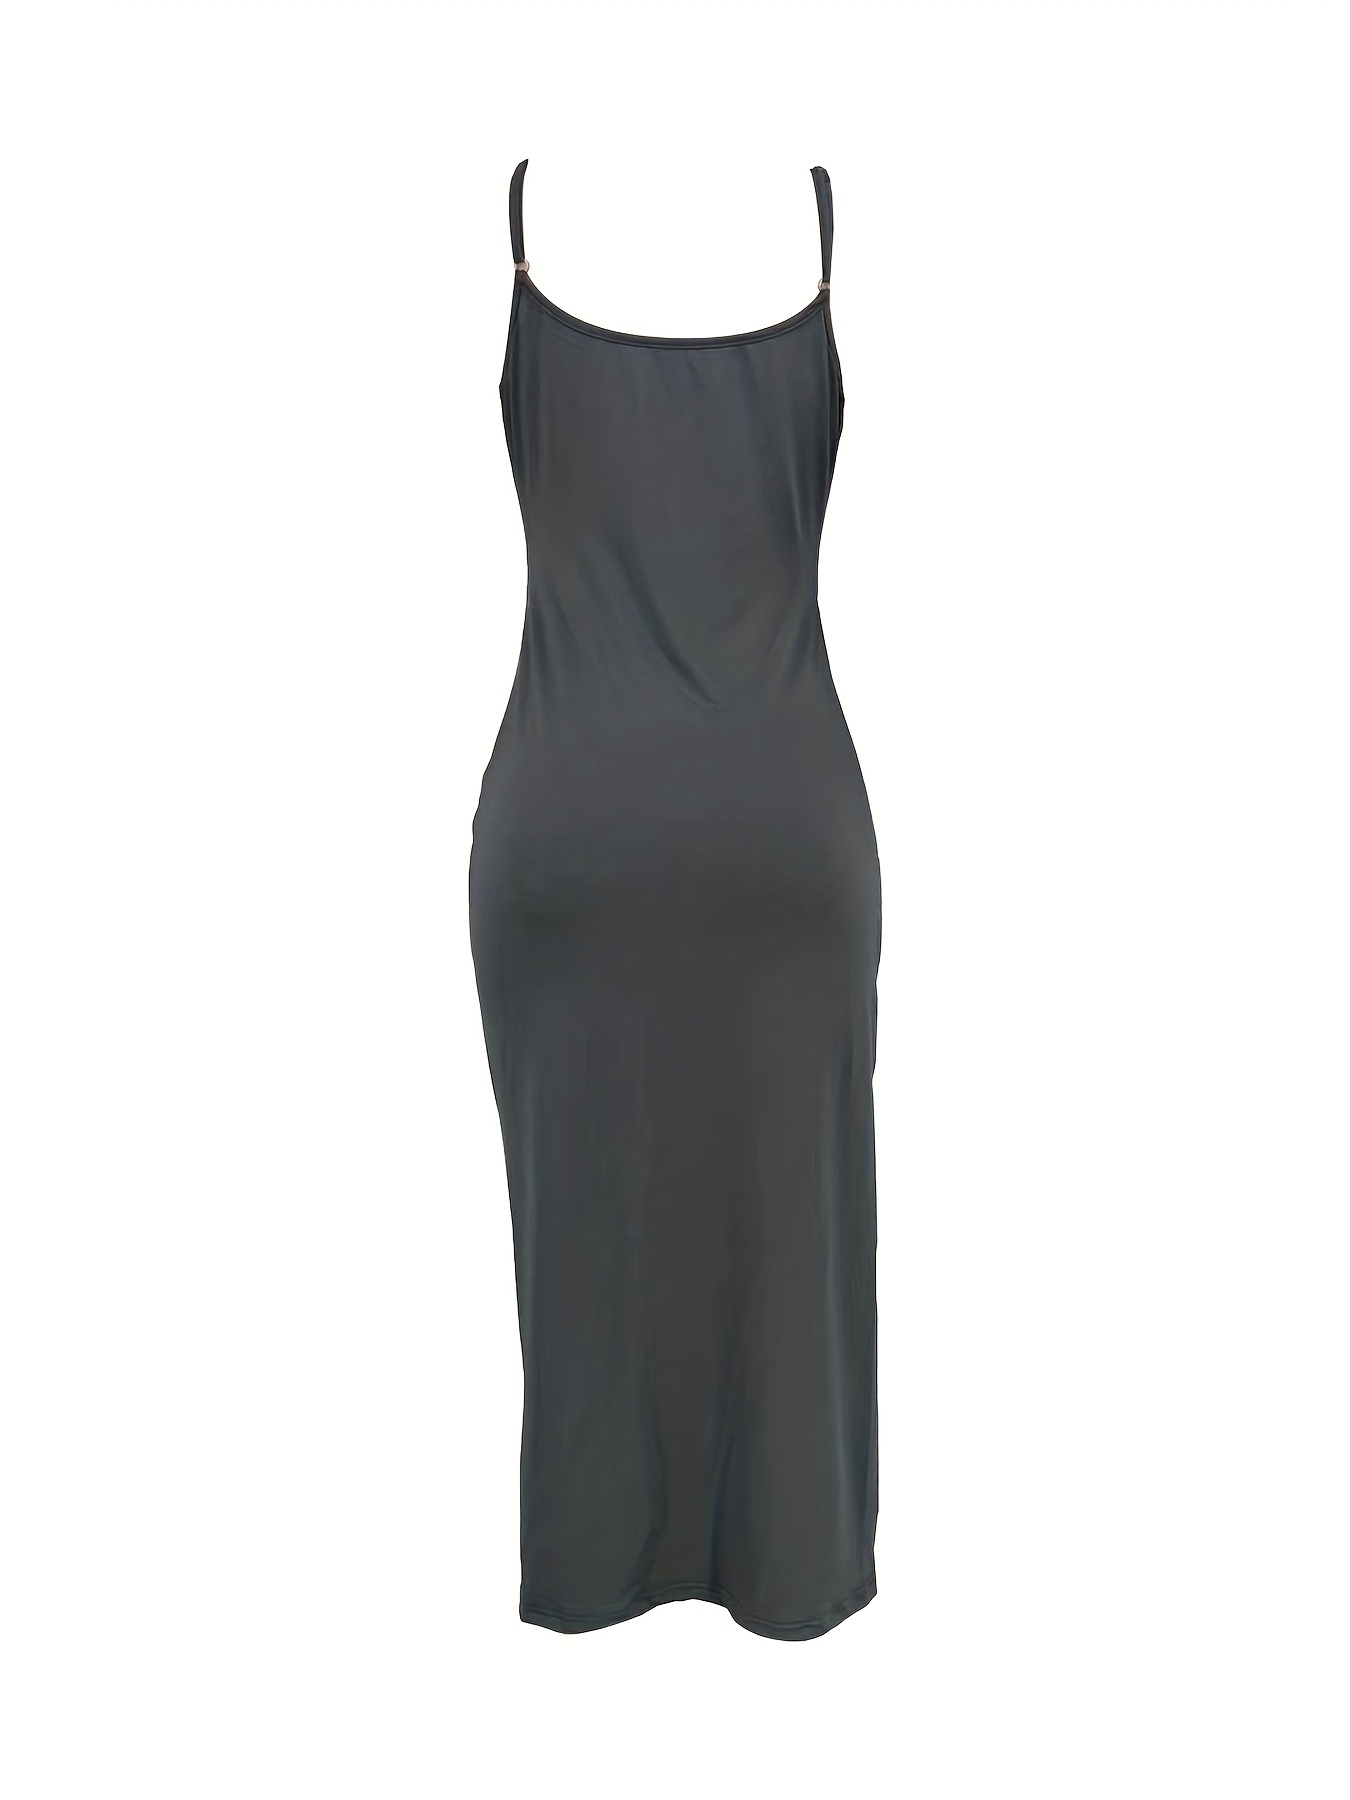 Buy SPAGHETTI STRAP BLACK DRAWSTRING BODYCON DRESS for Women